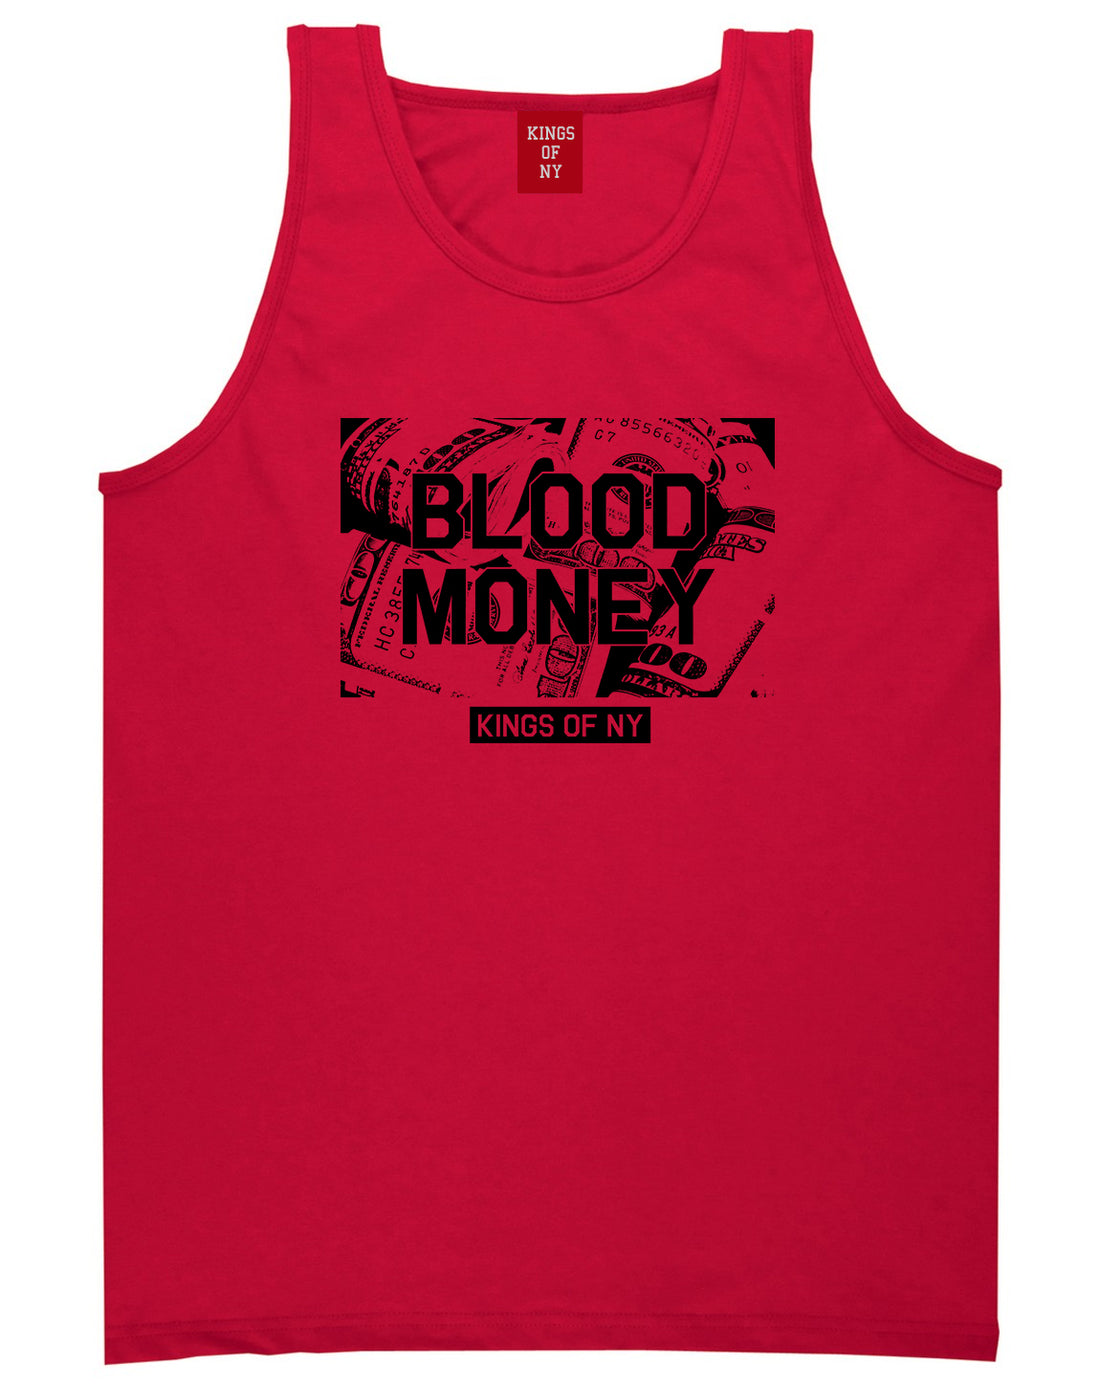 Blood Money 100s Mens Tank Top Shirt Red